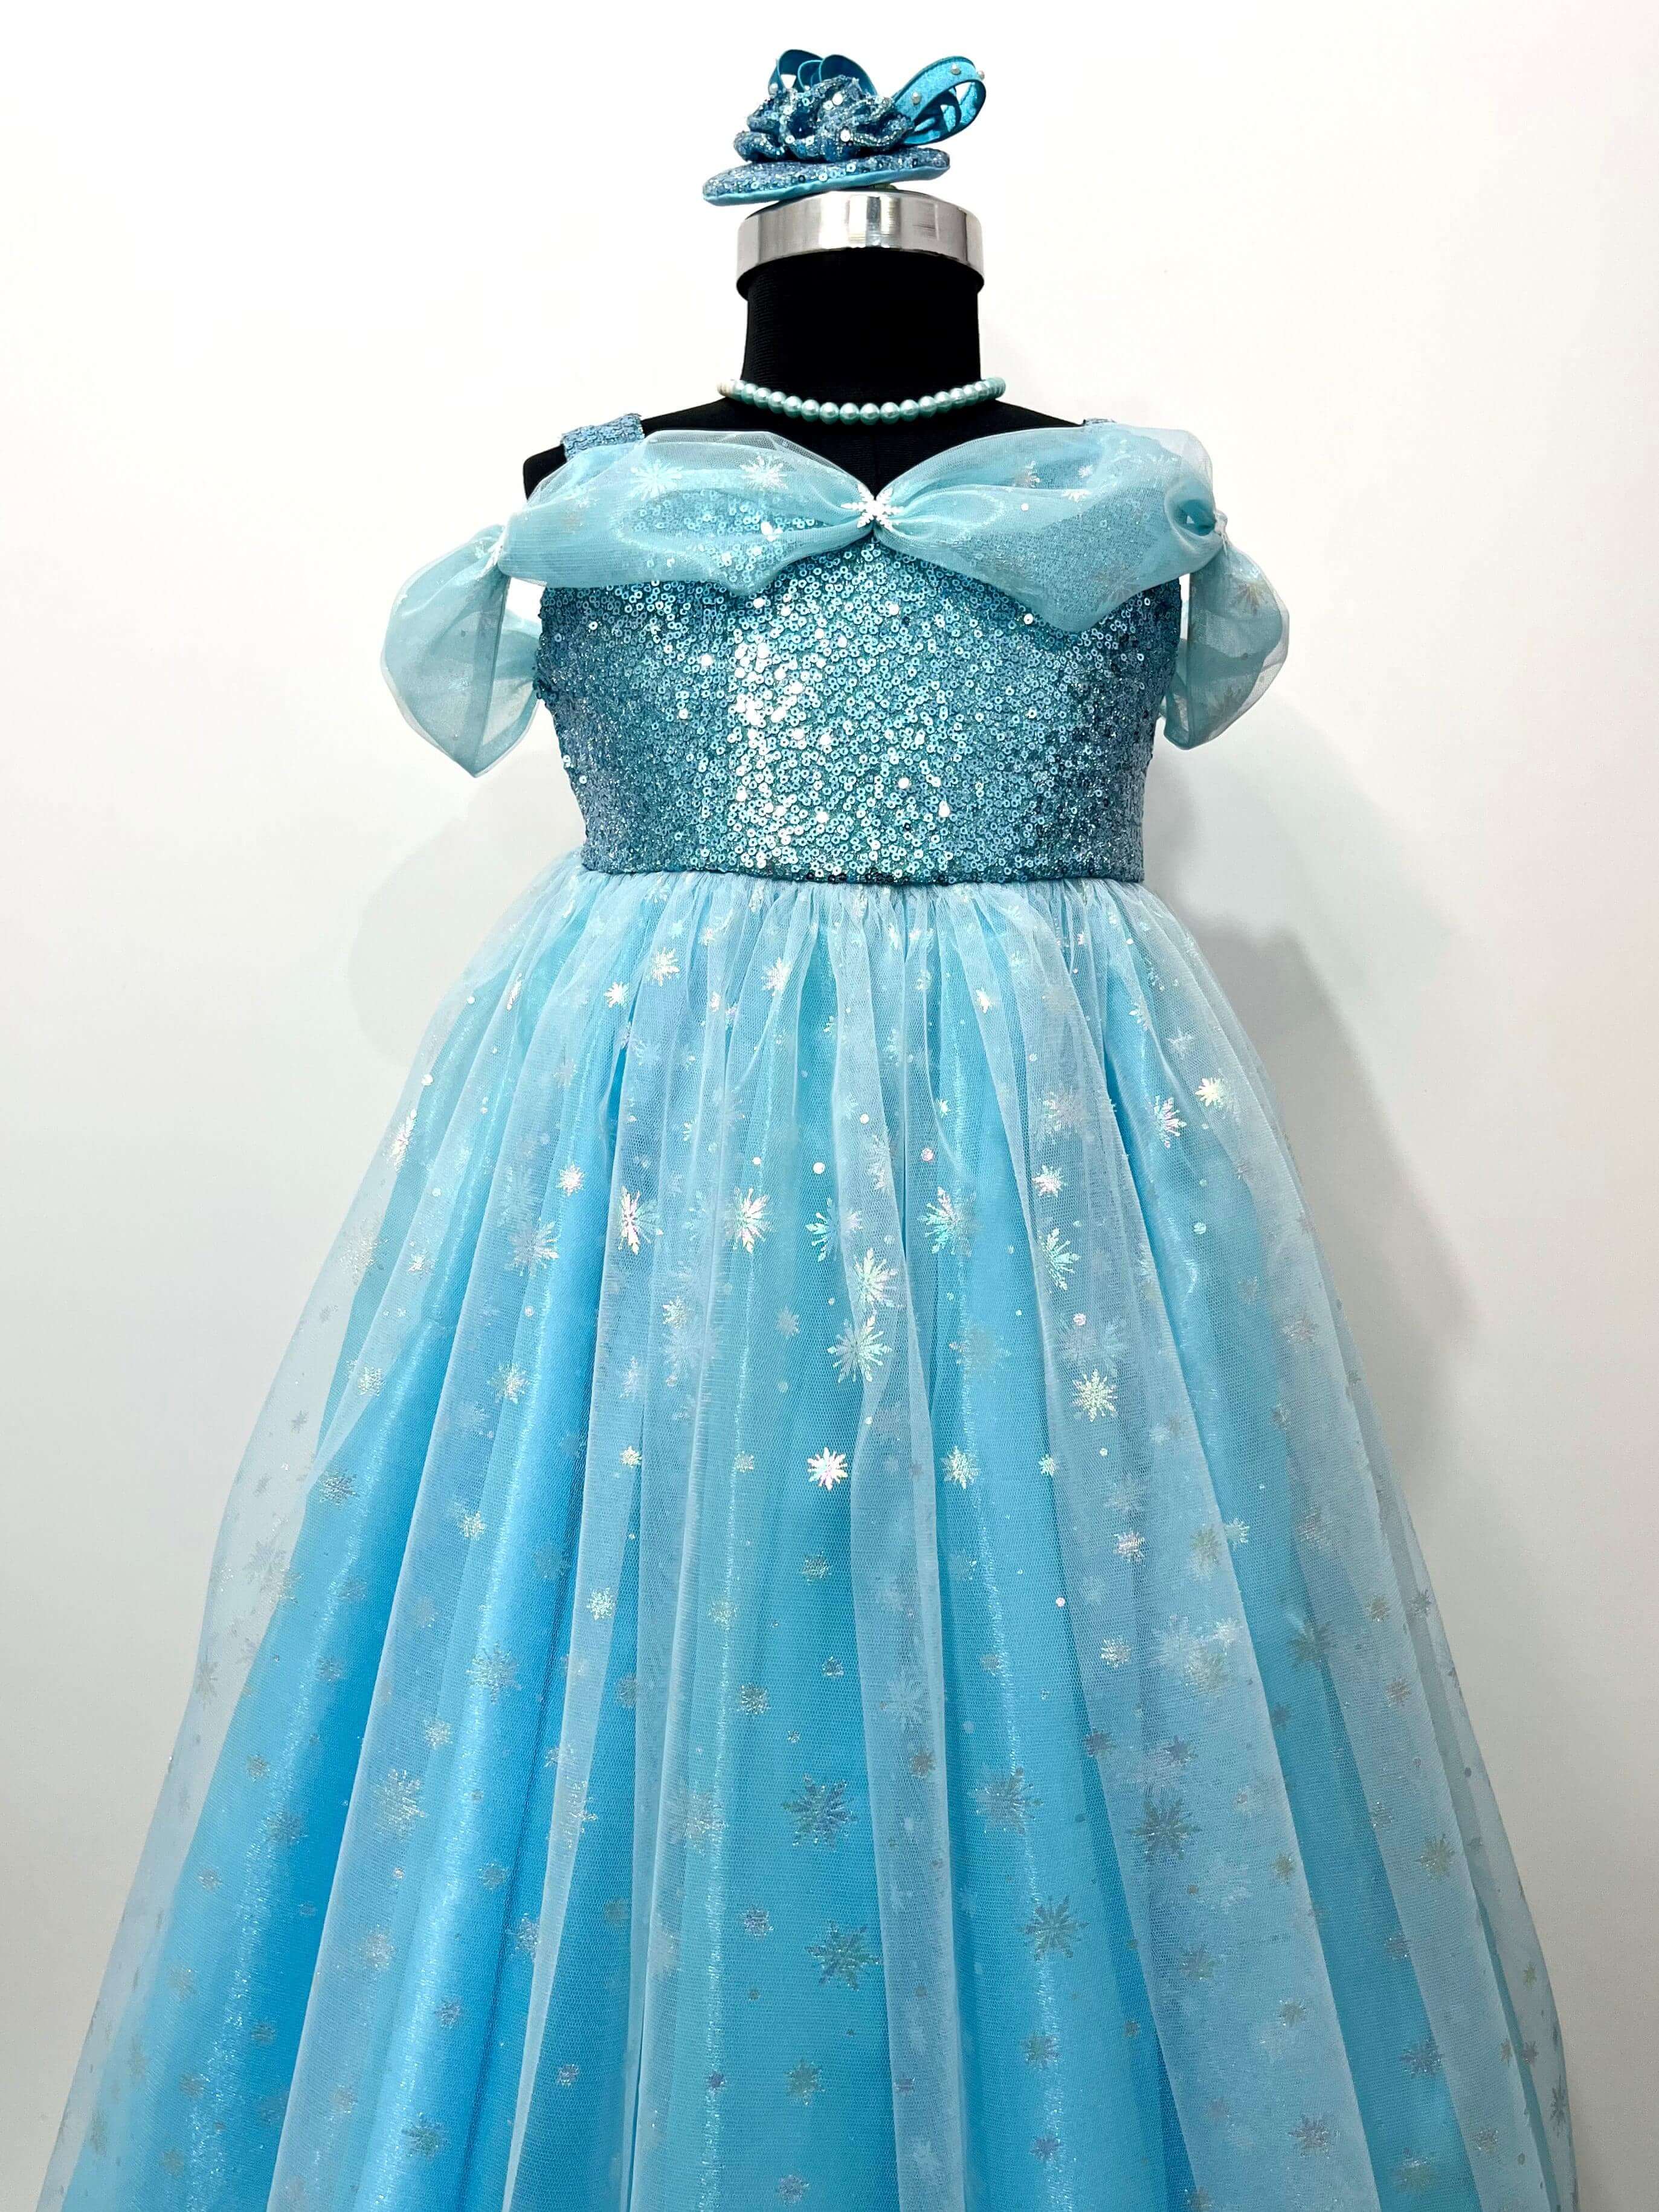 Disney's Frozen 2 Elsa Toddler Girl Fantasy Nightgown